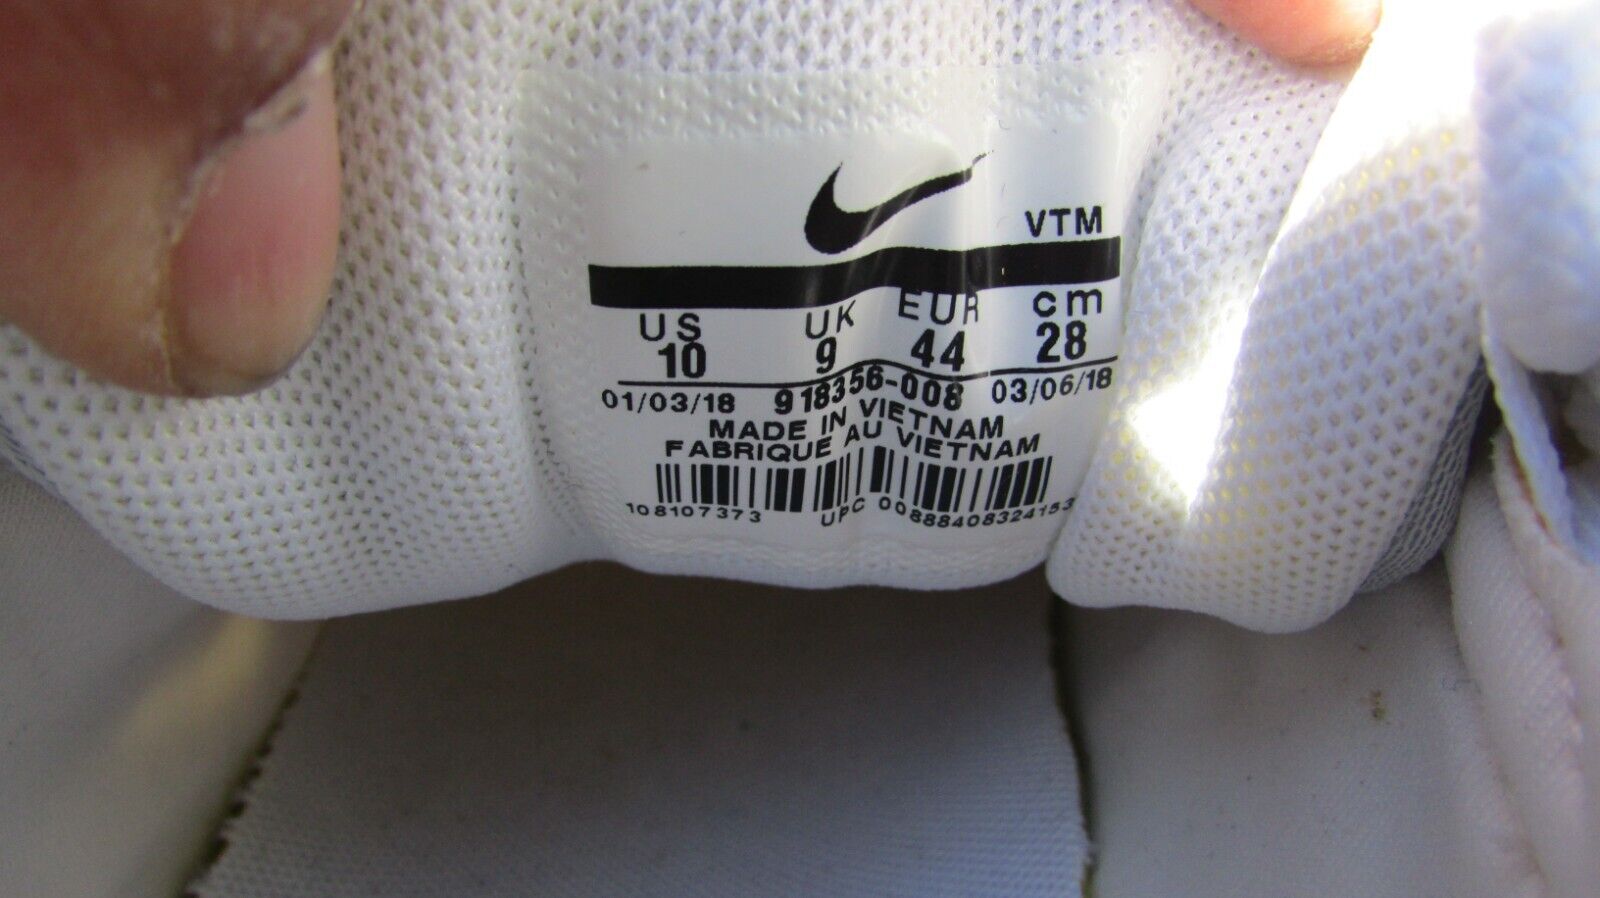 Nike Court Classic Tennis Shoes Men’s Size 8 Black White Sneakers 312495-011